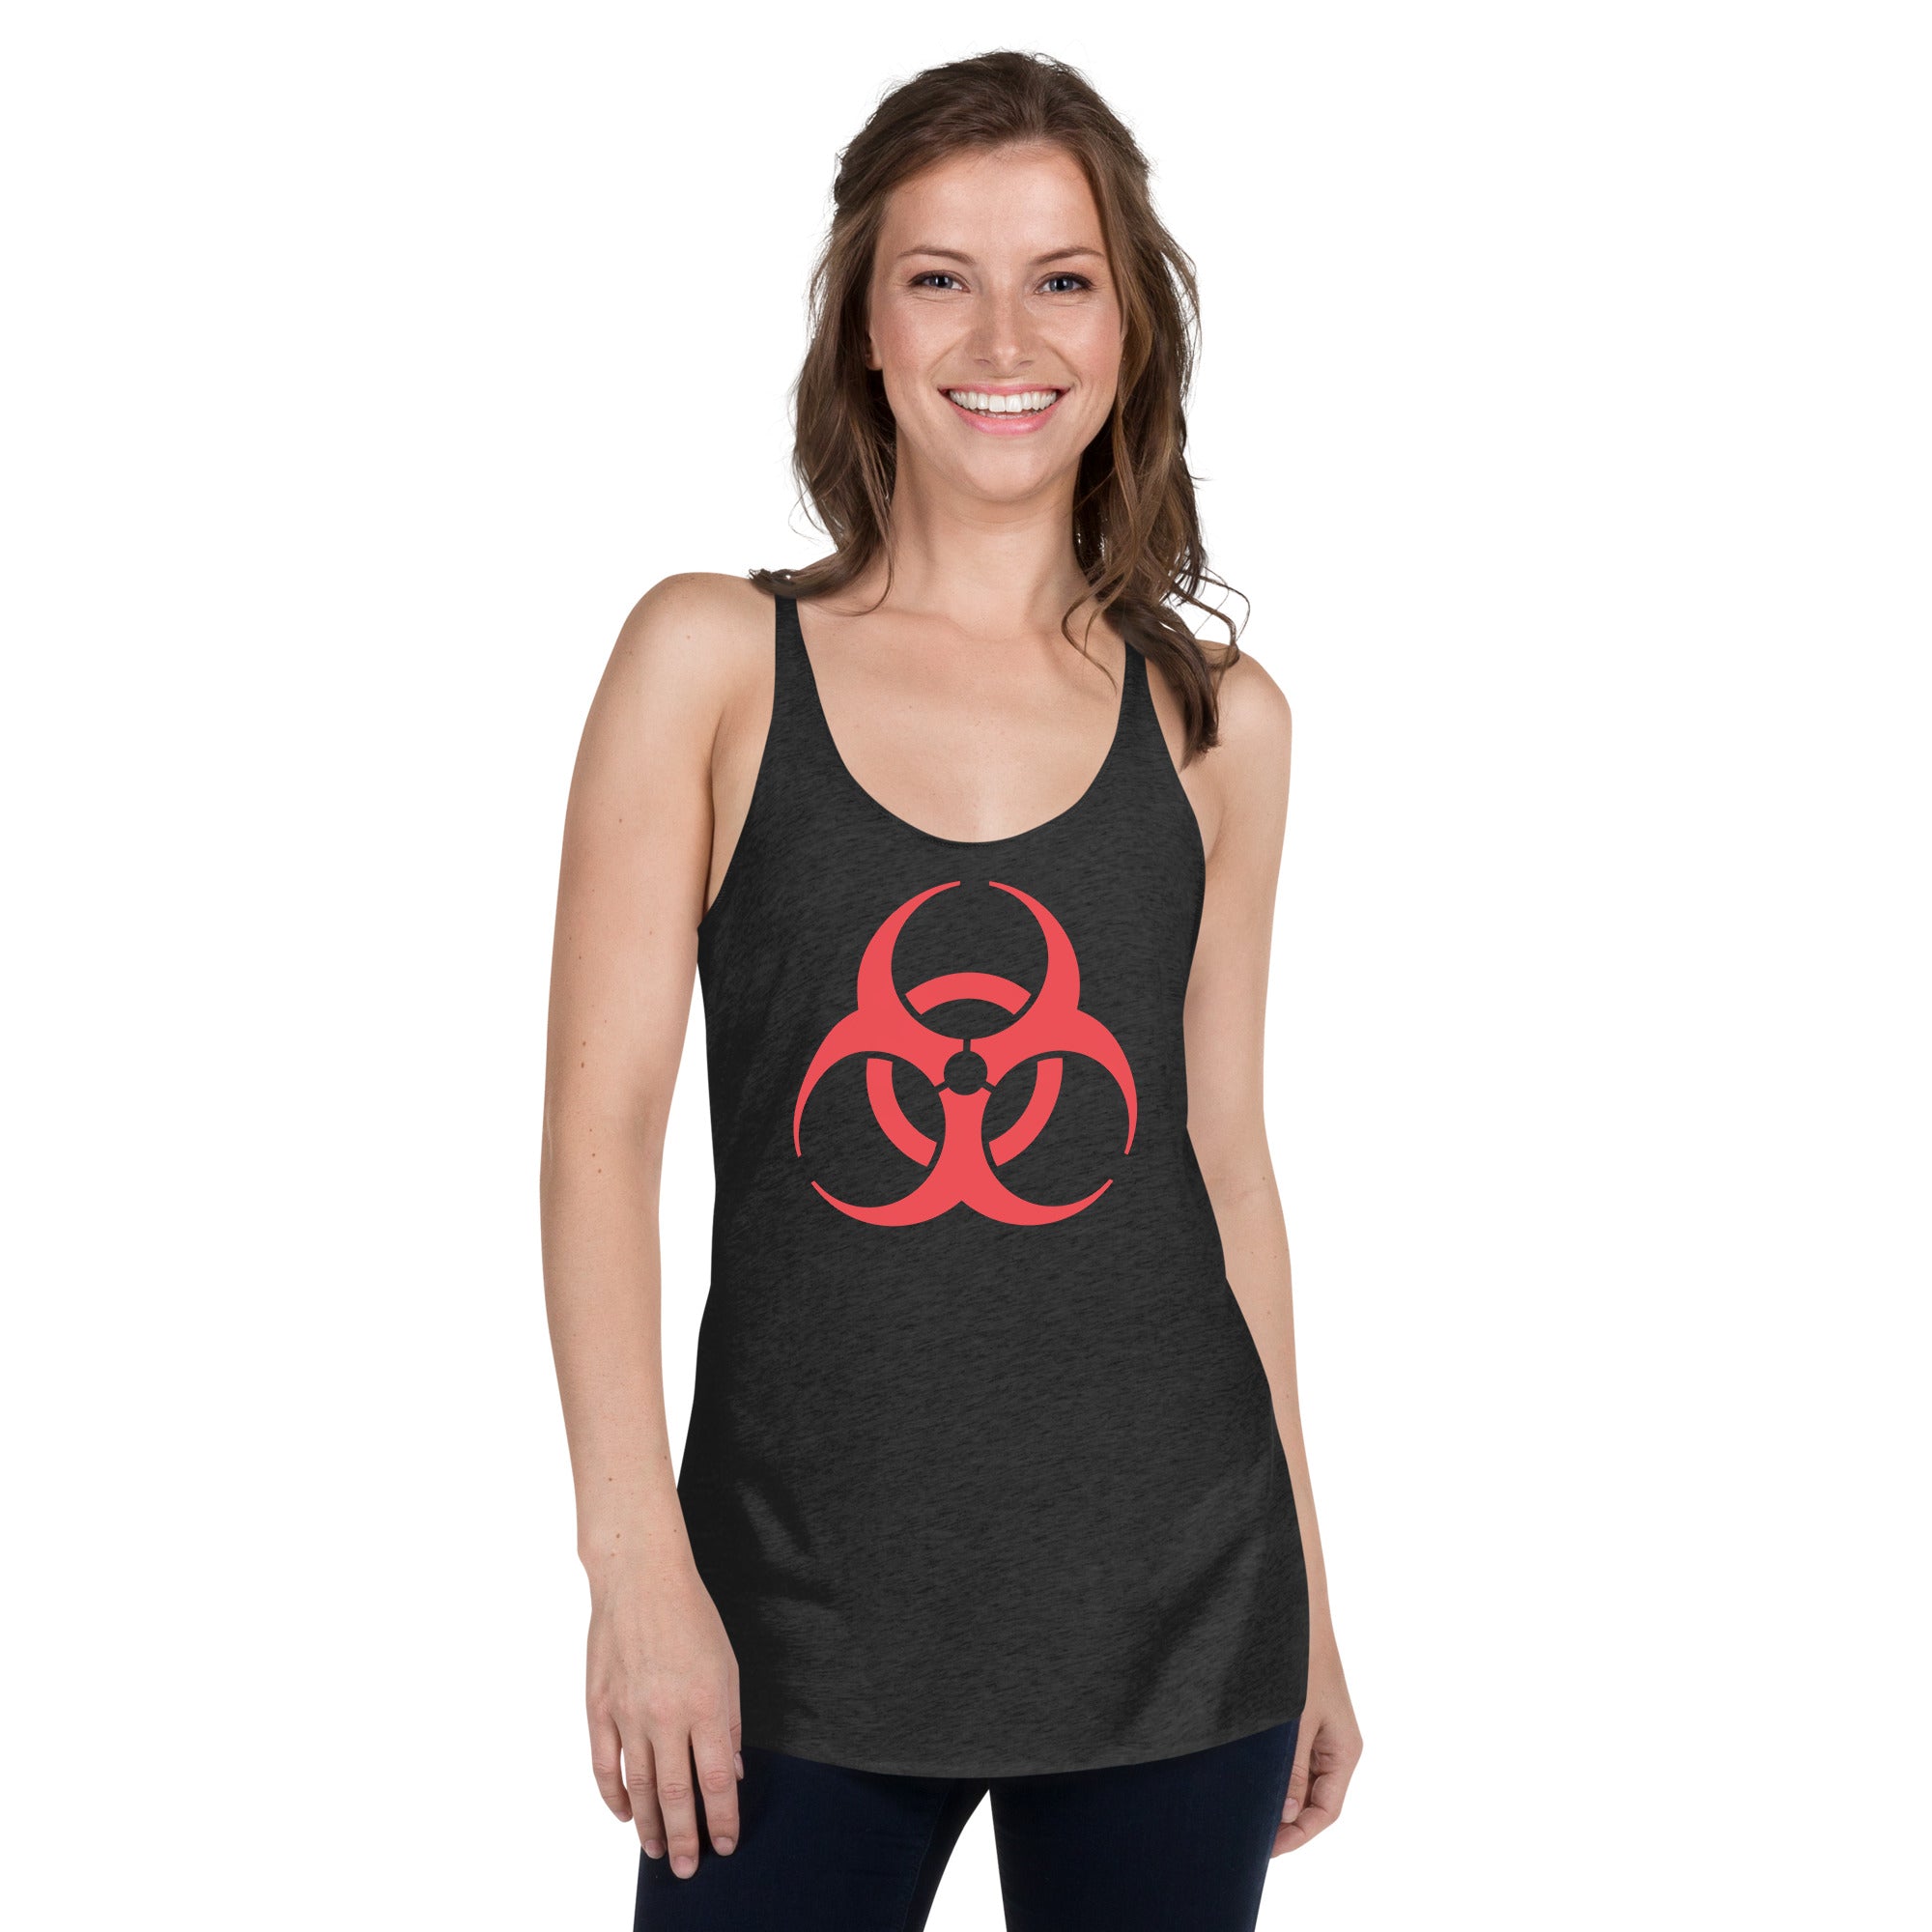 Red Biohazard Sign Toxic Chemical Symbol  Women's Racerback Tank Top Shirt